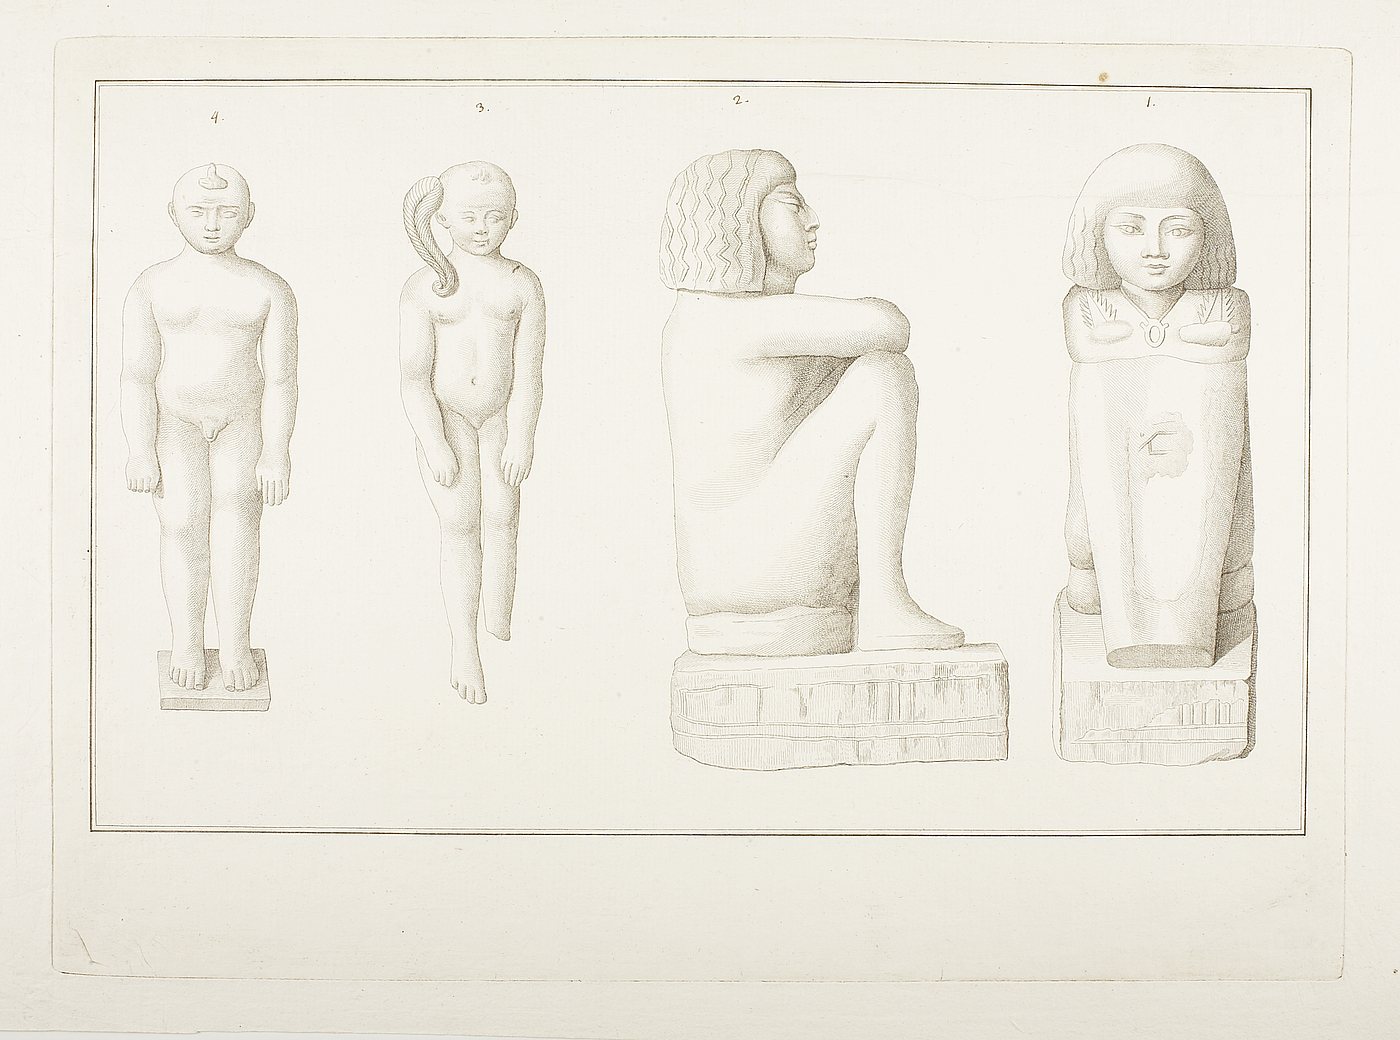 Monumenta Artis Ægyptiæ in Musæo Naniano Veneteiis Tab.III